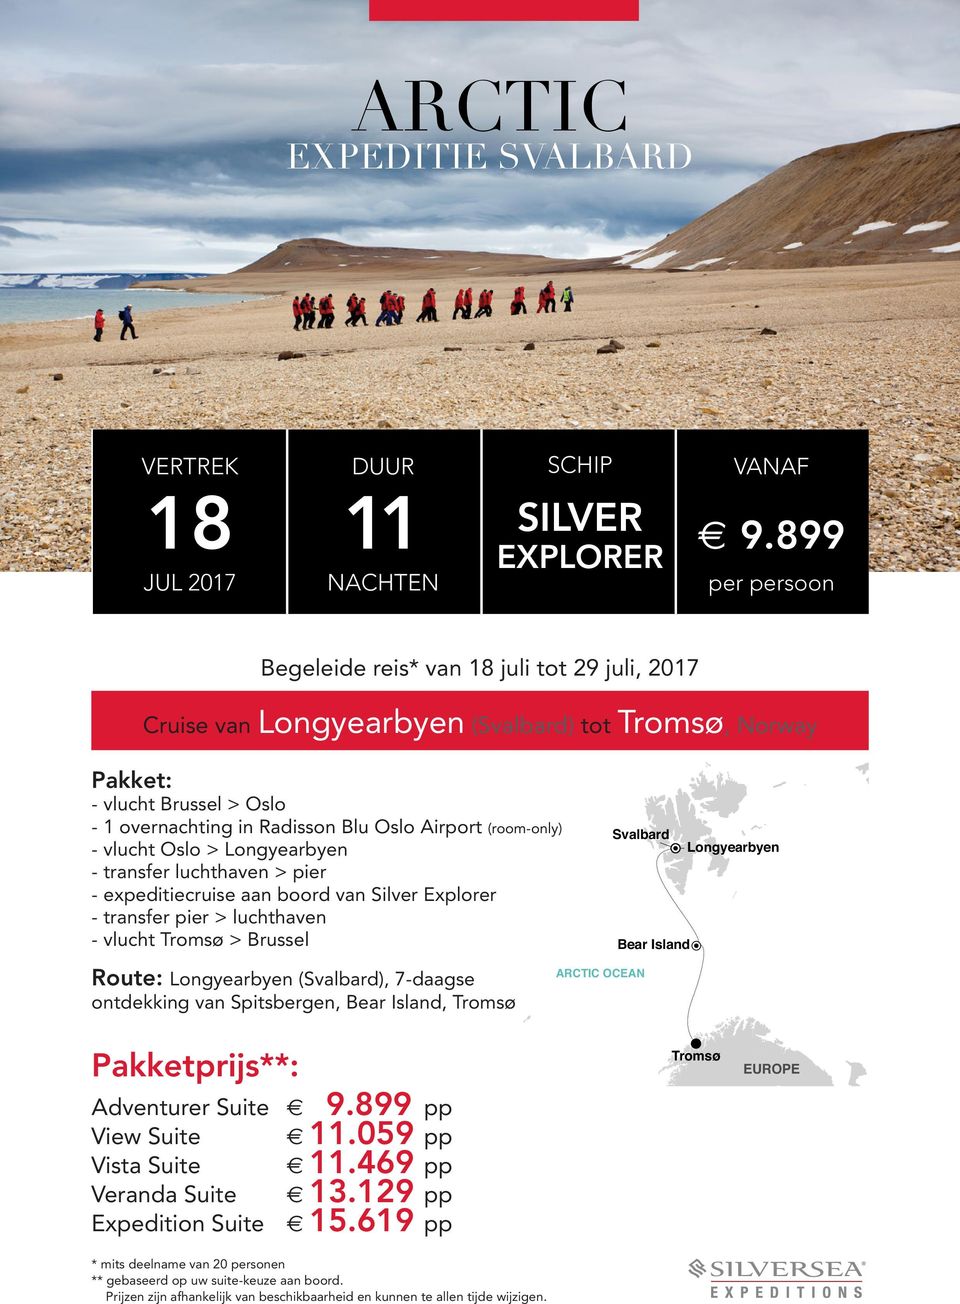 (room-only) - vlucht Oslo > Longyearbyen - transfer luchthaven > pier - expeditiecruise aan boord van Silver Explorer - transfer pier > luchthaven - vlucht Tromsø > Brussel Svalbard Bear Island